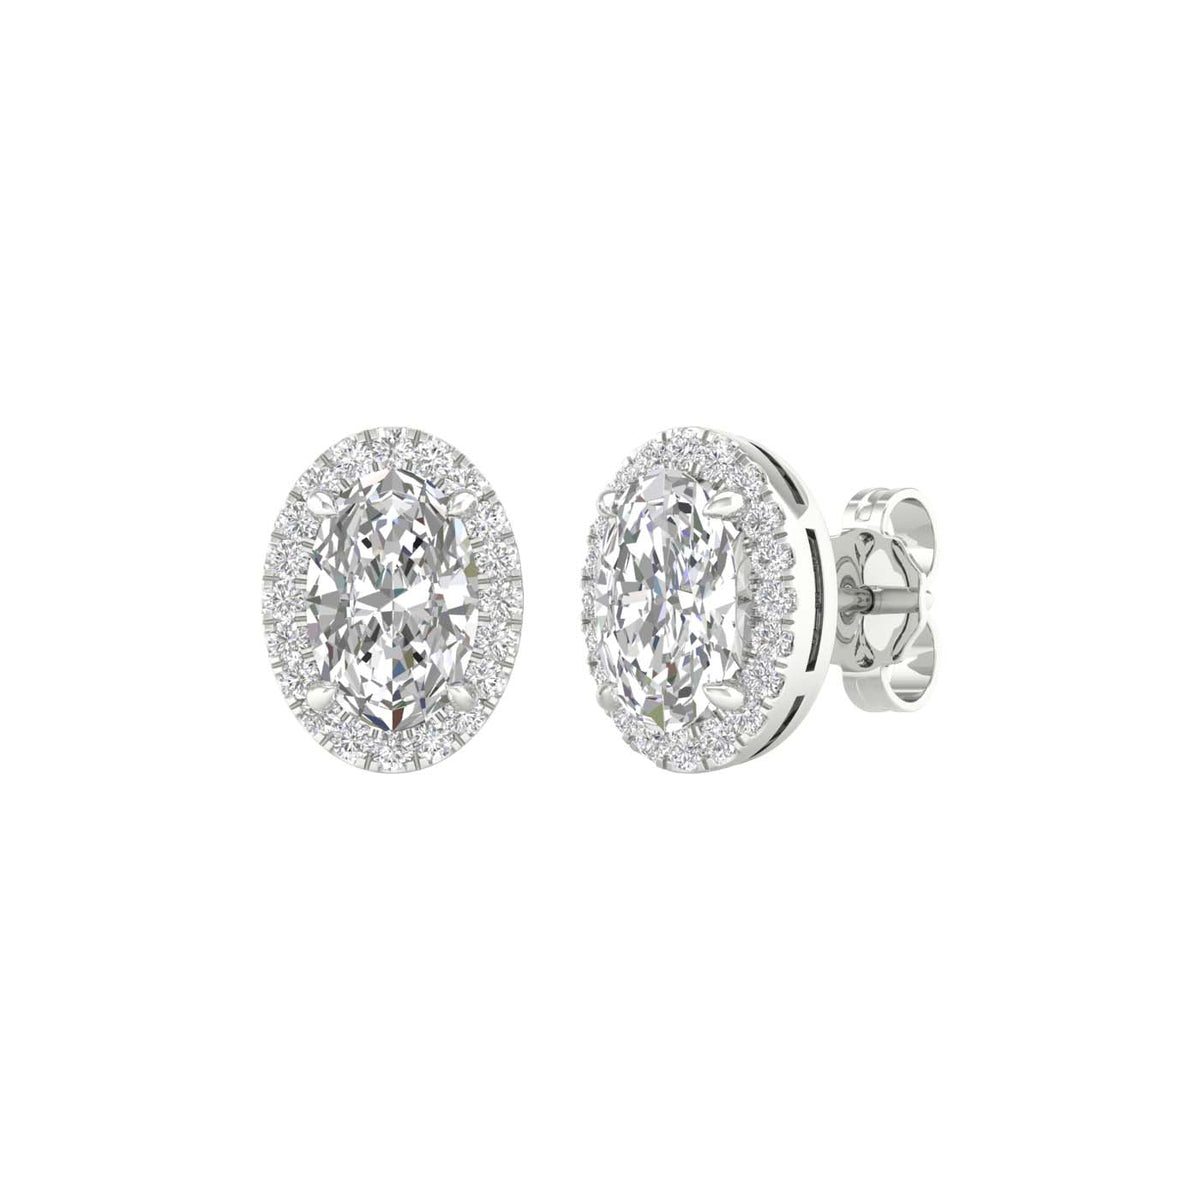 3ct Diamond Halo Earring in 14K White Gold Over Everyday Diamond Earrings,  Womans Diamond Studs, Gold Over Diamond Stud Earring, Man Earring - Etsy